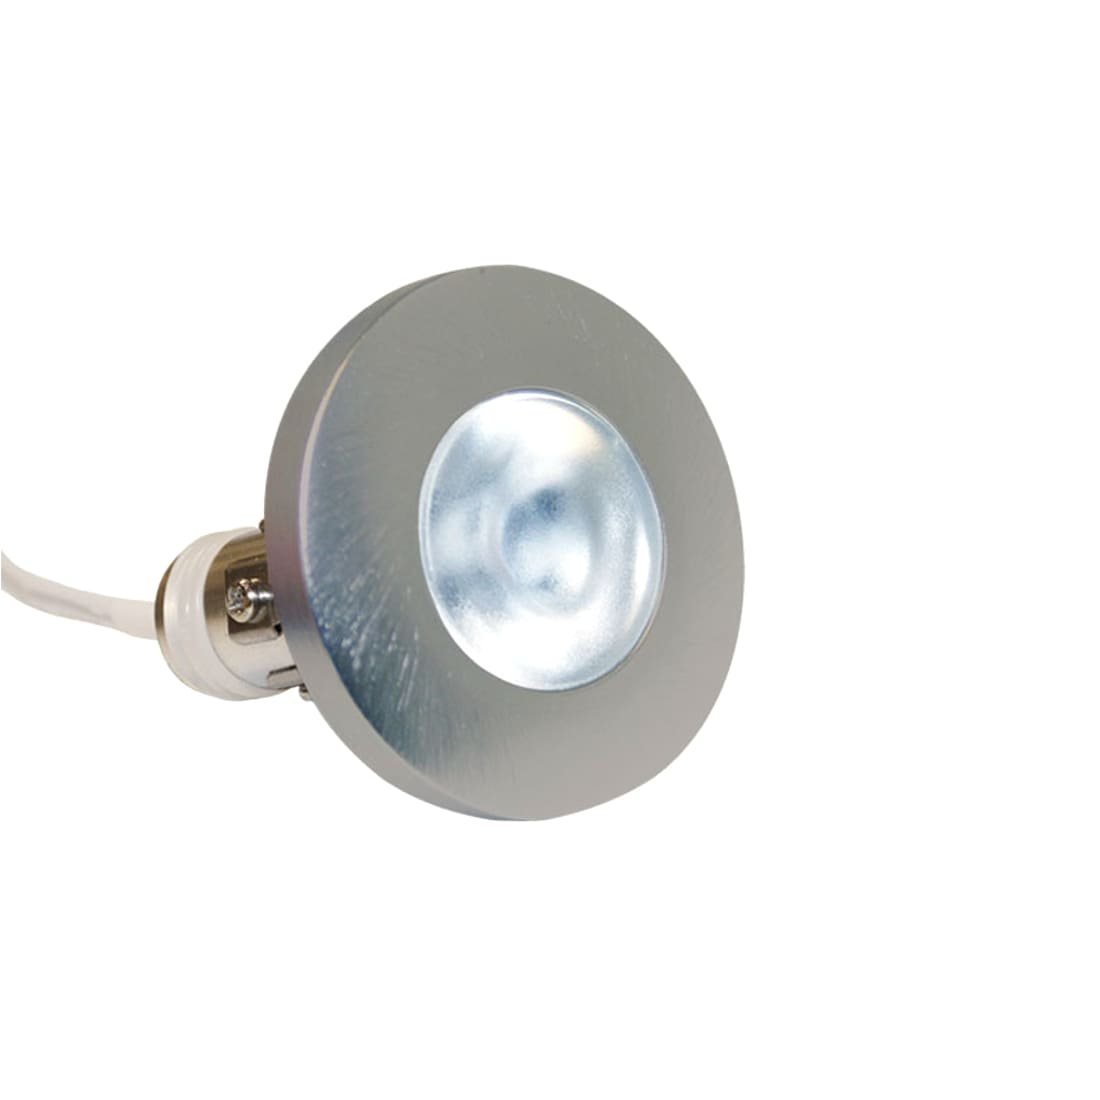 Se Nordtronic Viola Mini, lille LED-spot til indbygning, 2W / 30 / 2700K / dmpbar - brstet aluminium hos PlusLED.dk